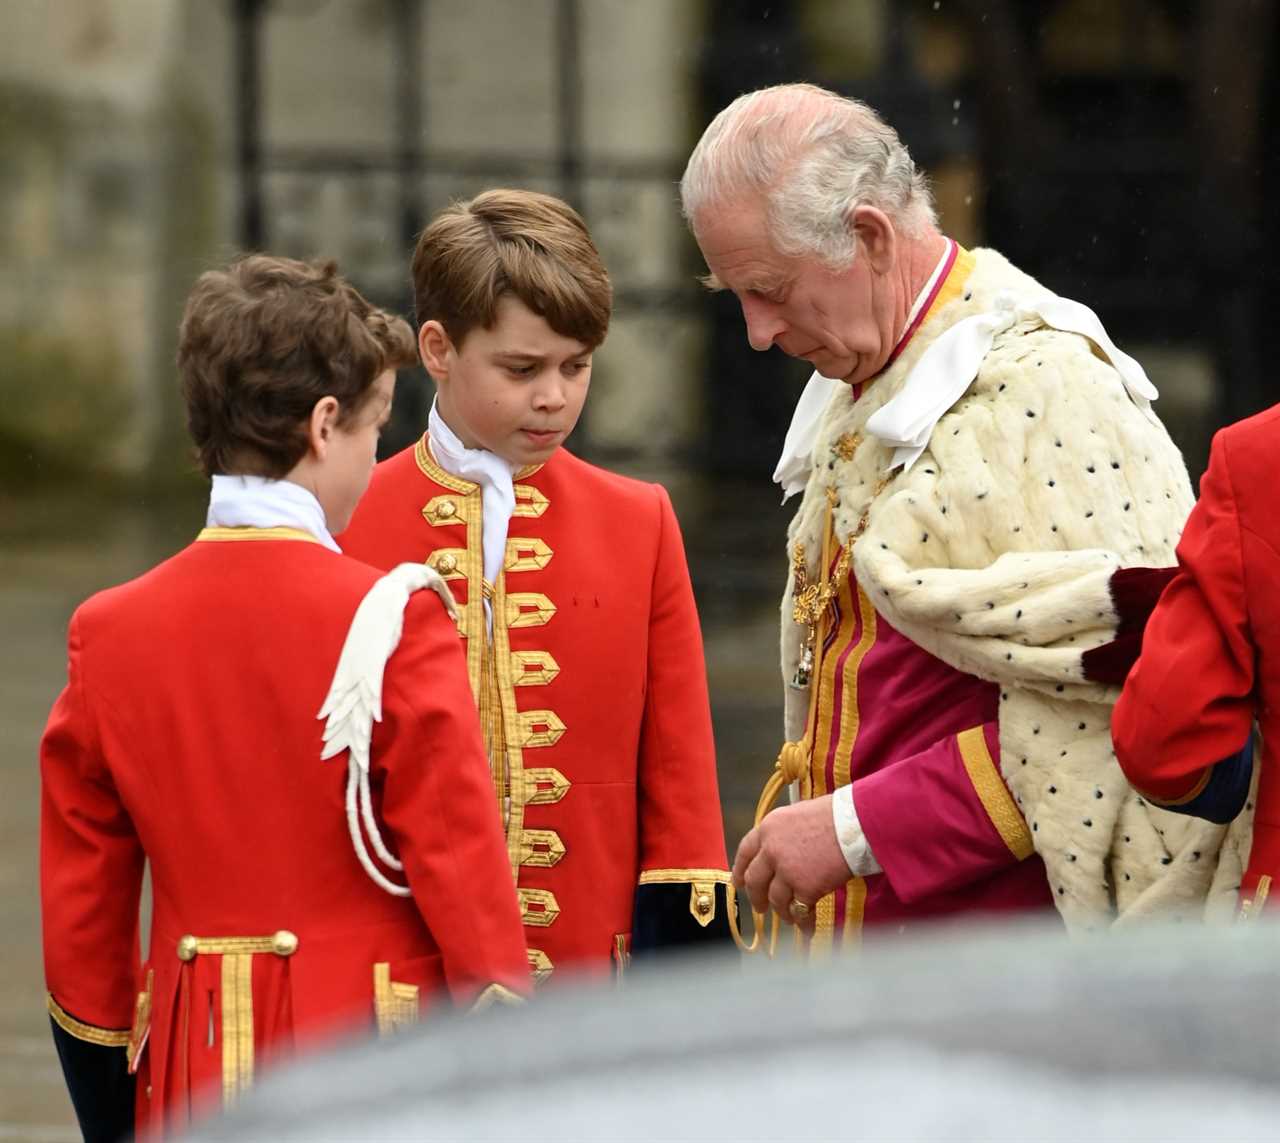 Mandatory Credit: Photo by David Fisher/Shutterstock (13901639cw) Prince George and King Charles III The Coronation of King Charles III, London, UK - 06 May 2023